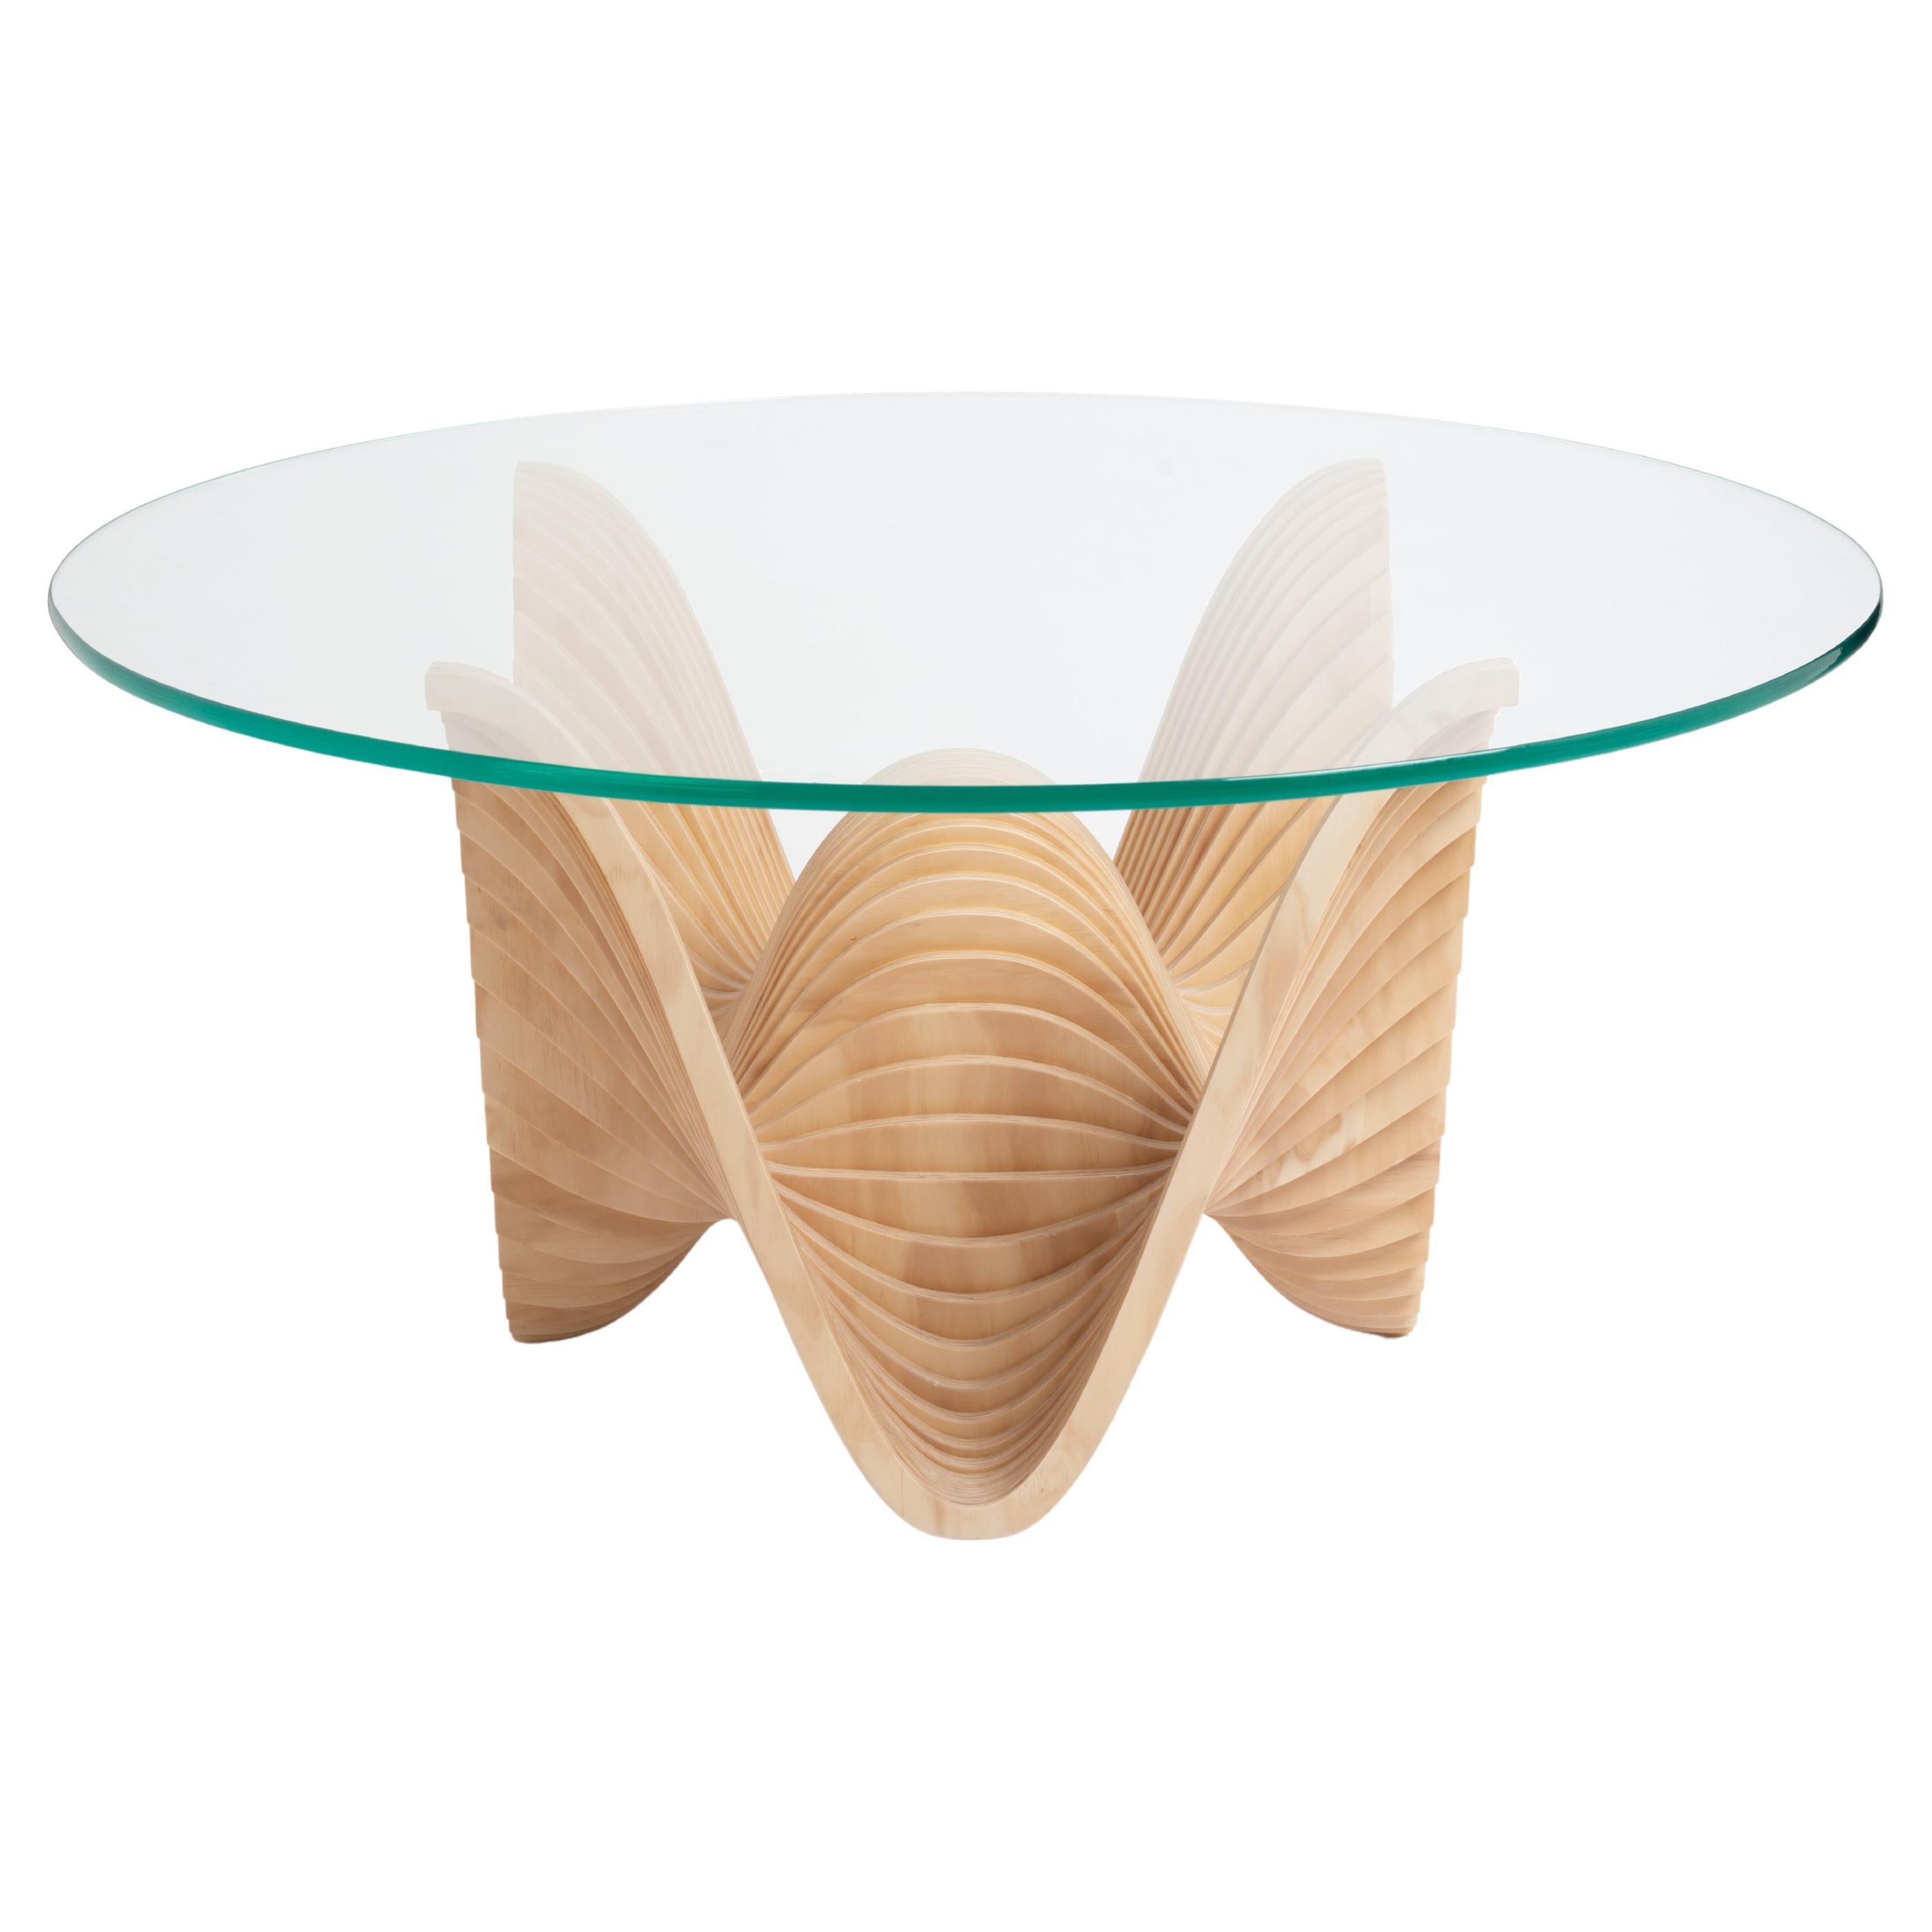 Candy Dining Table Medium by Piegatto, une table contemporaine sculpturale en vente